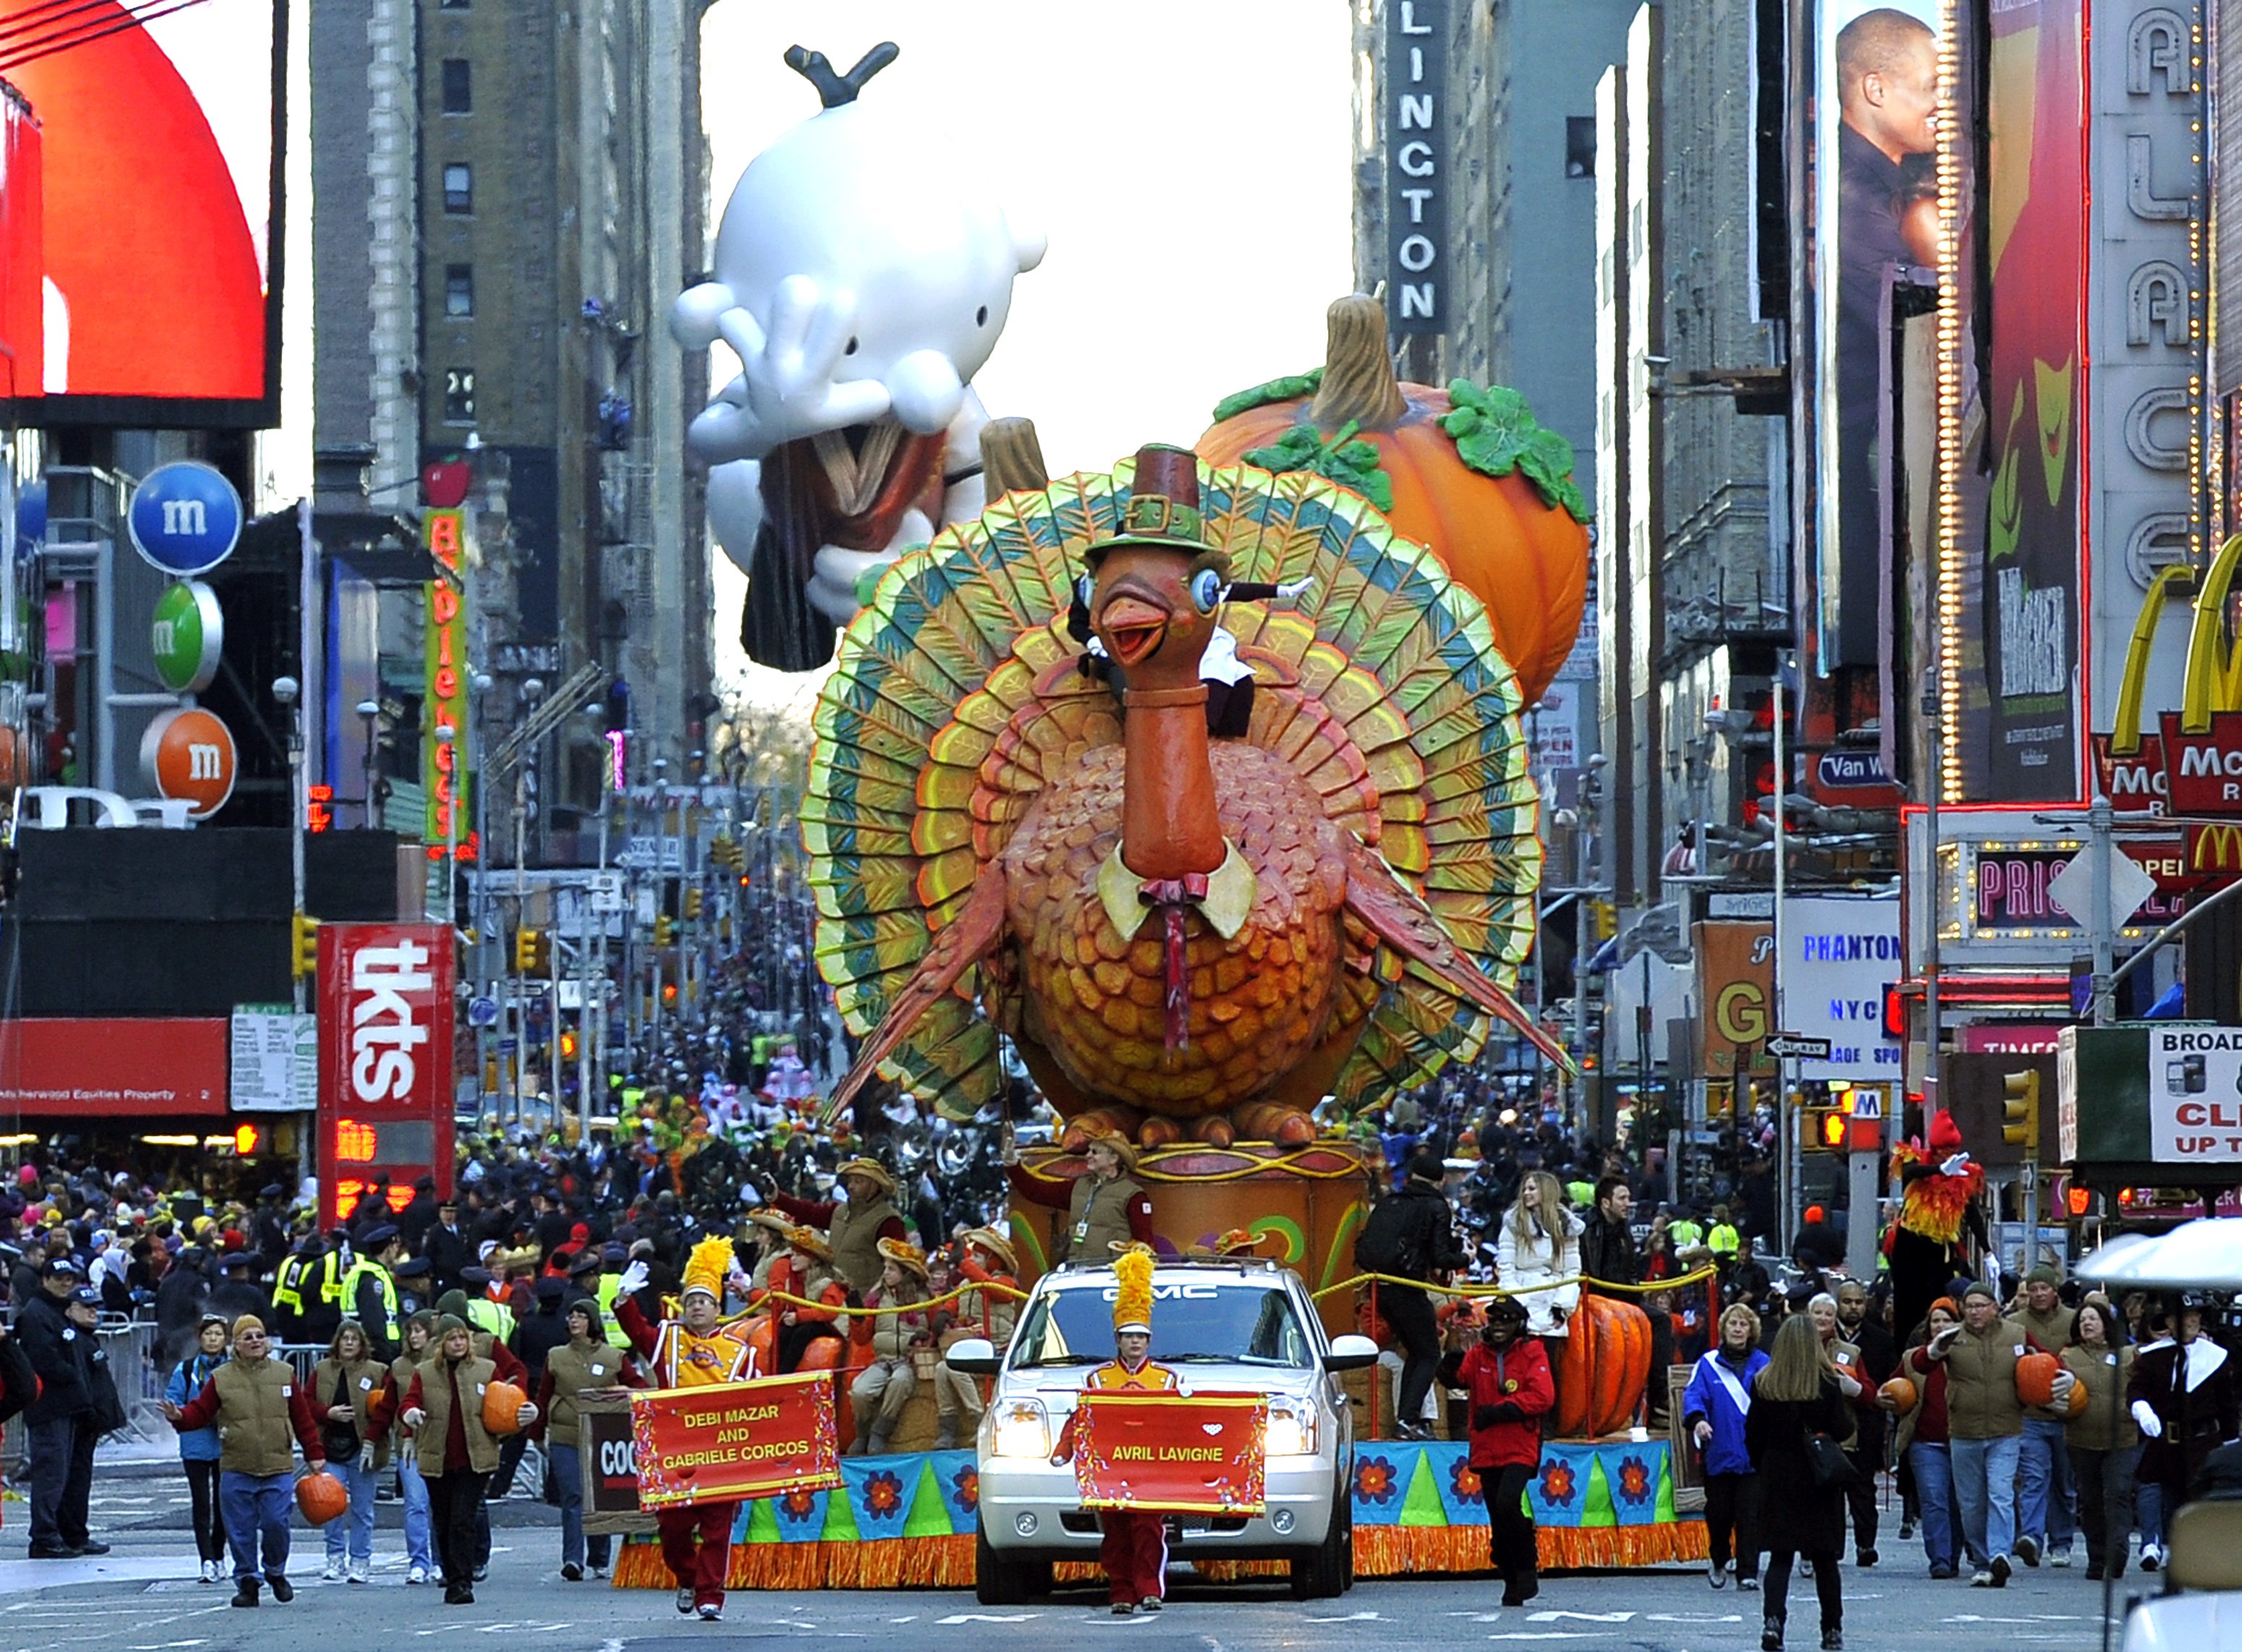 Macy’s Thanksgiving Day Parade 2020 won’t be cancelled despite coronavirus